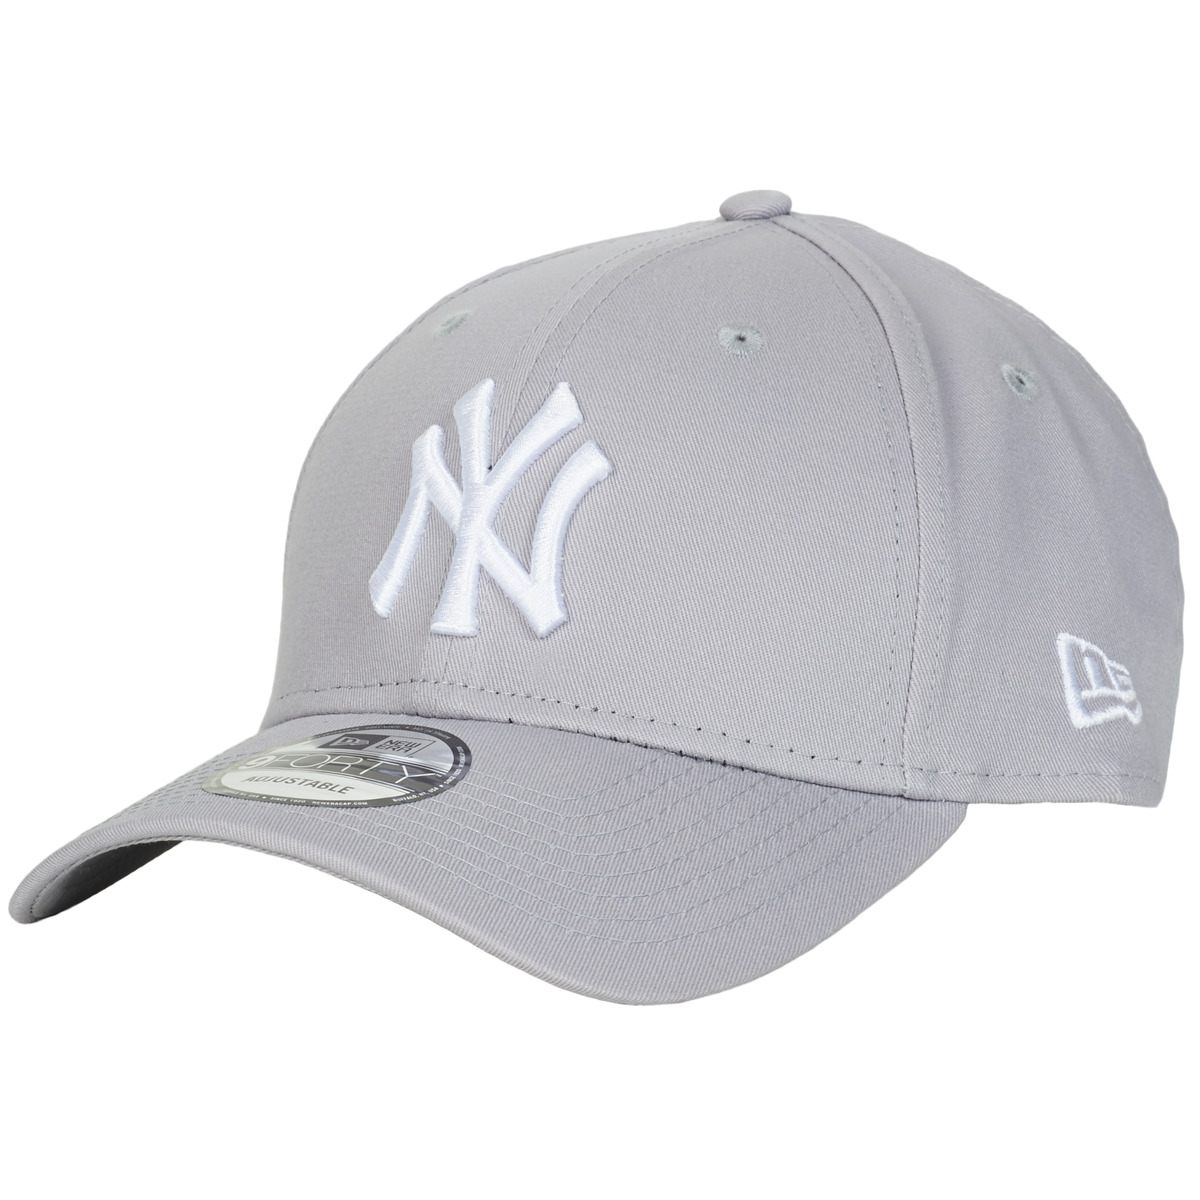 New Era 9FORTY Yankees Cap - School Wear United